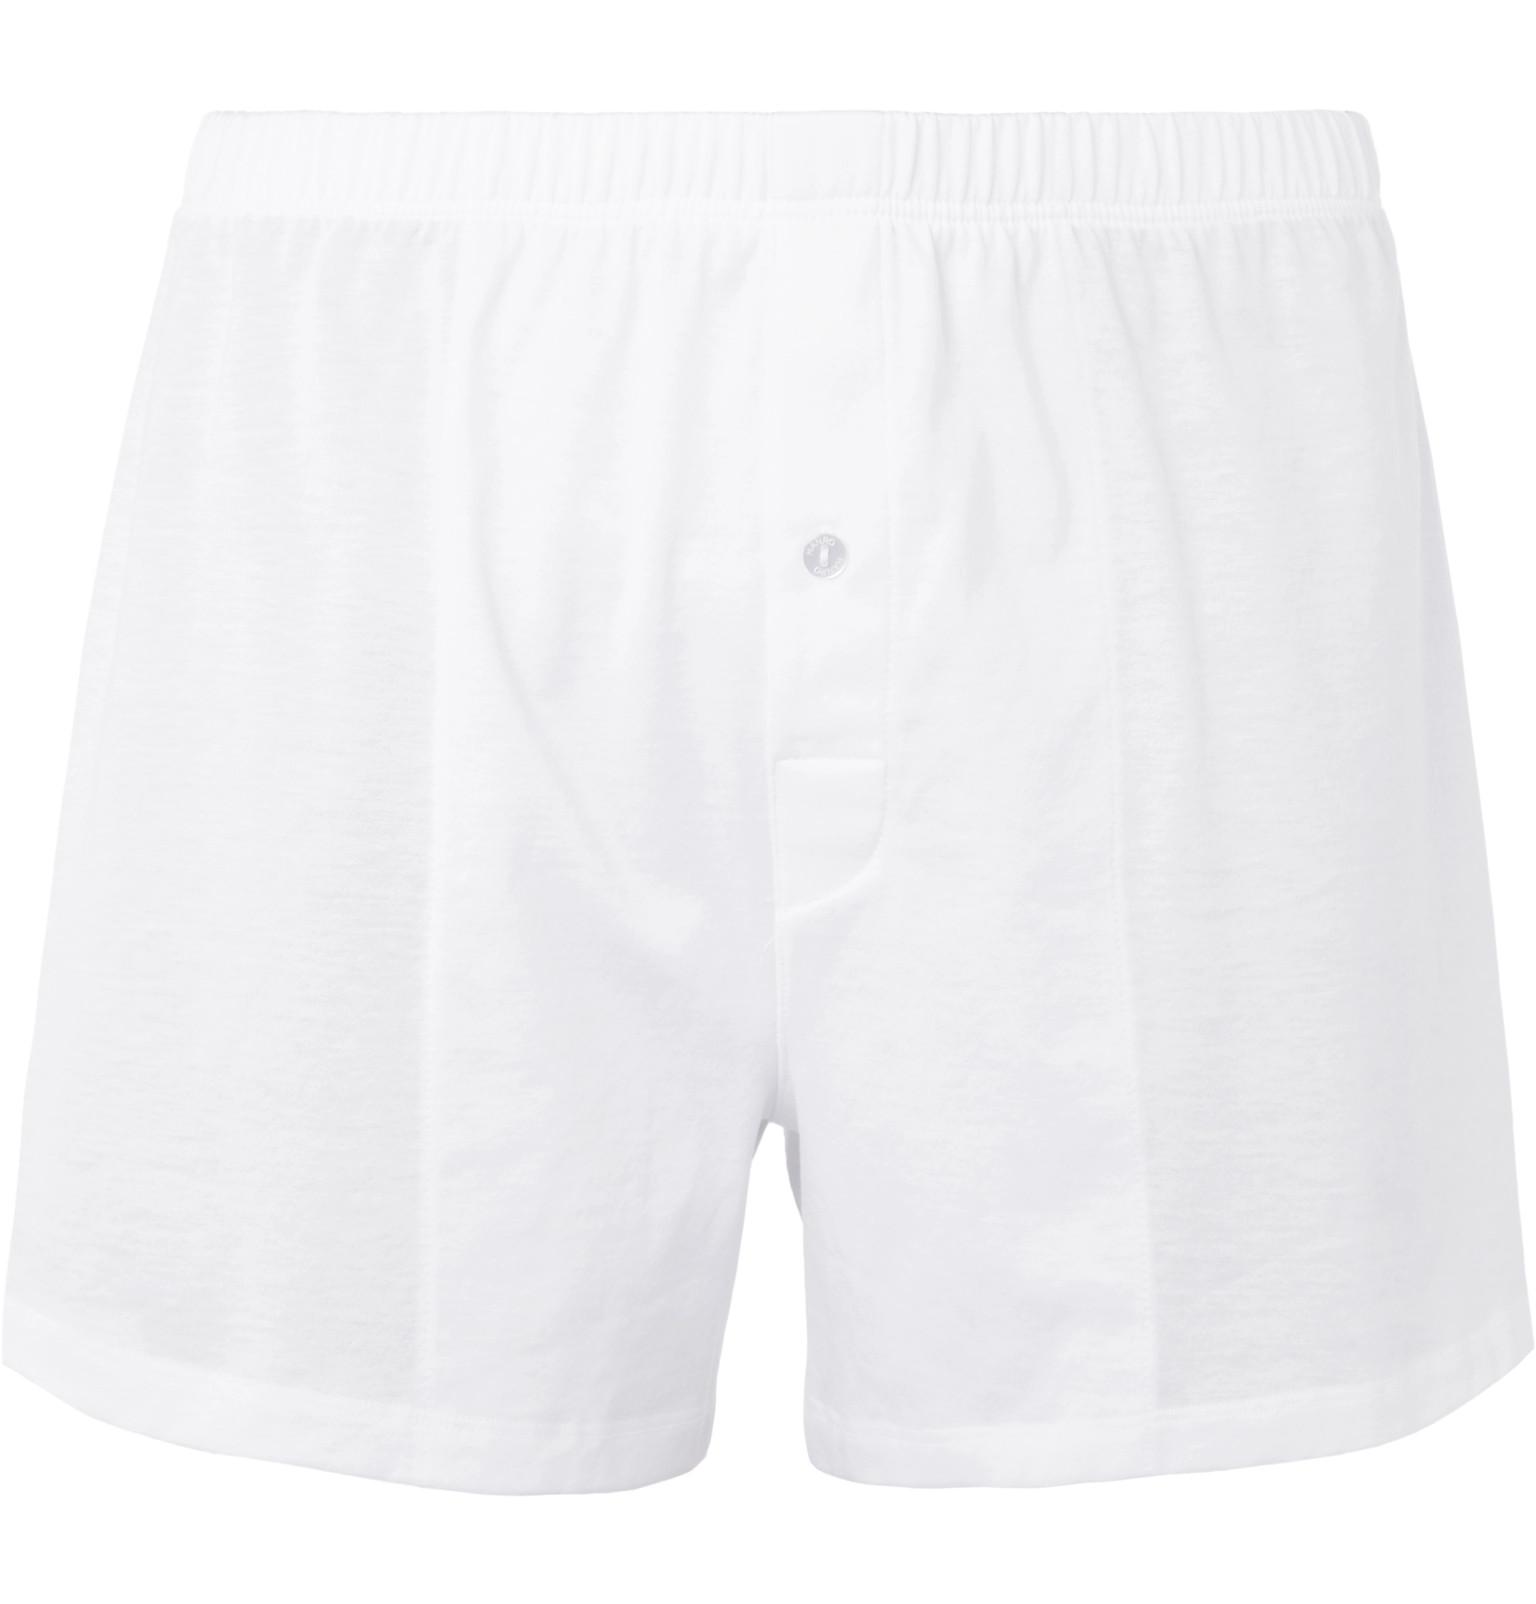 Hanro Sporty Mercerised Cotton Boxer Shorts in White for Men - Lyst